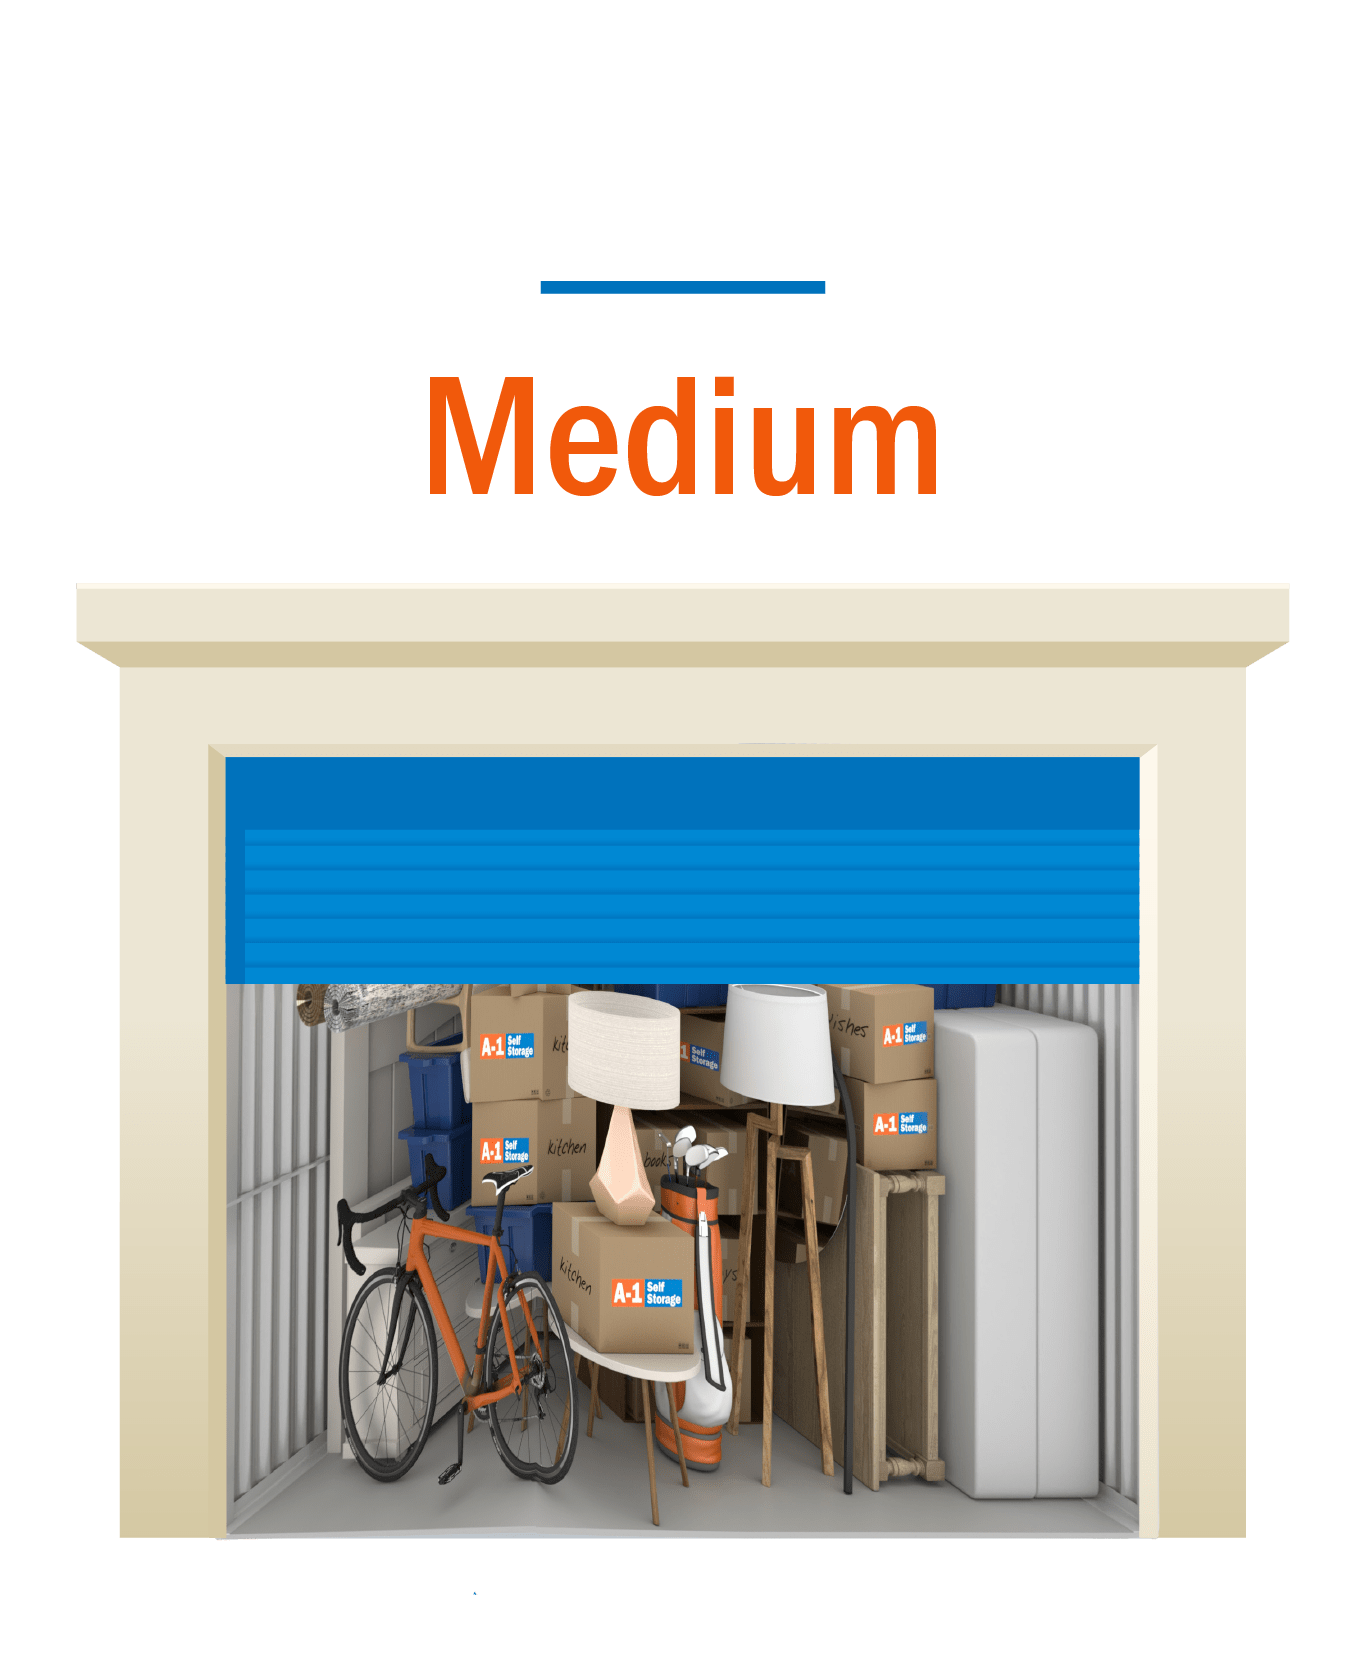 Medium storage unit graphic with door open